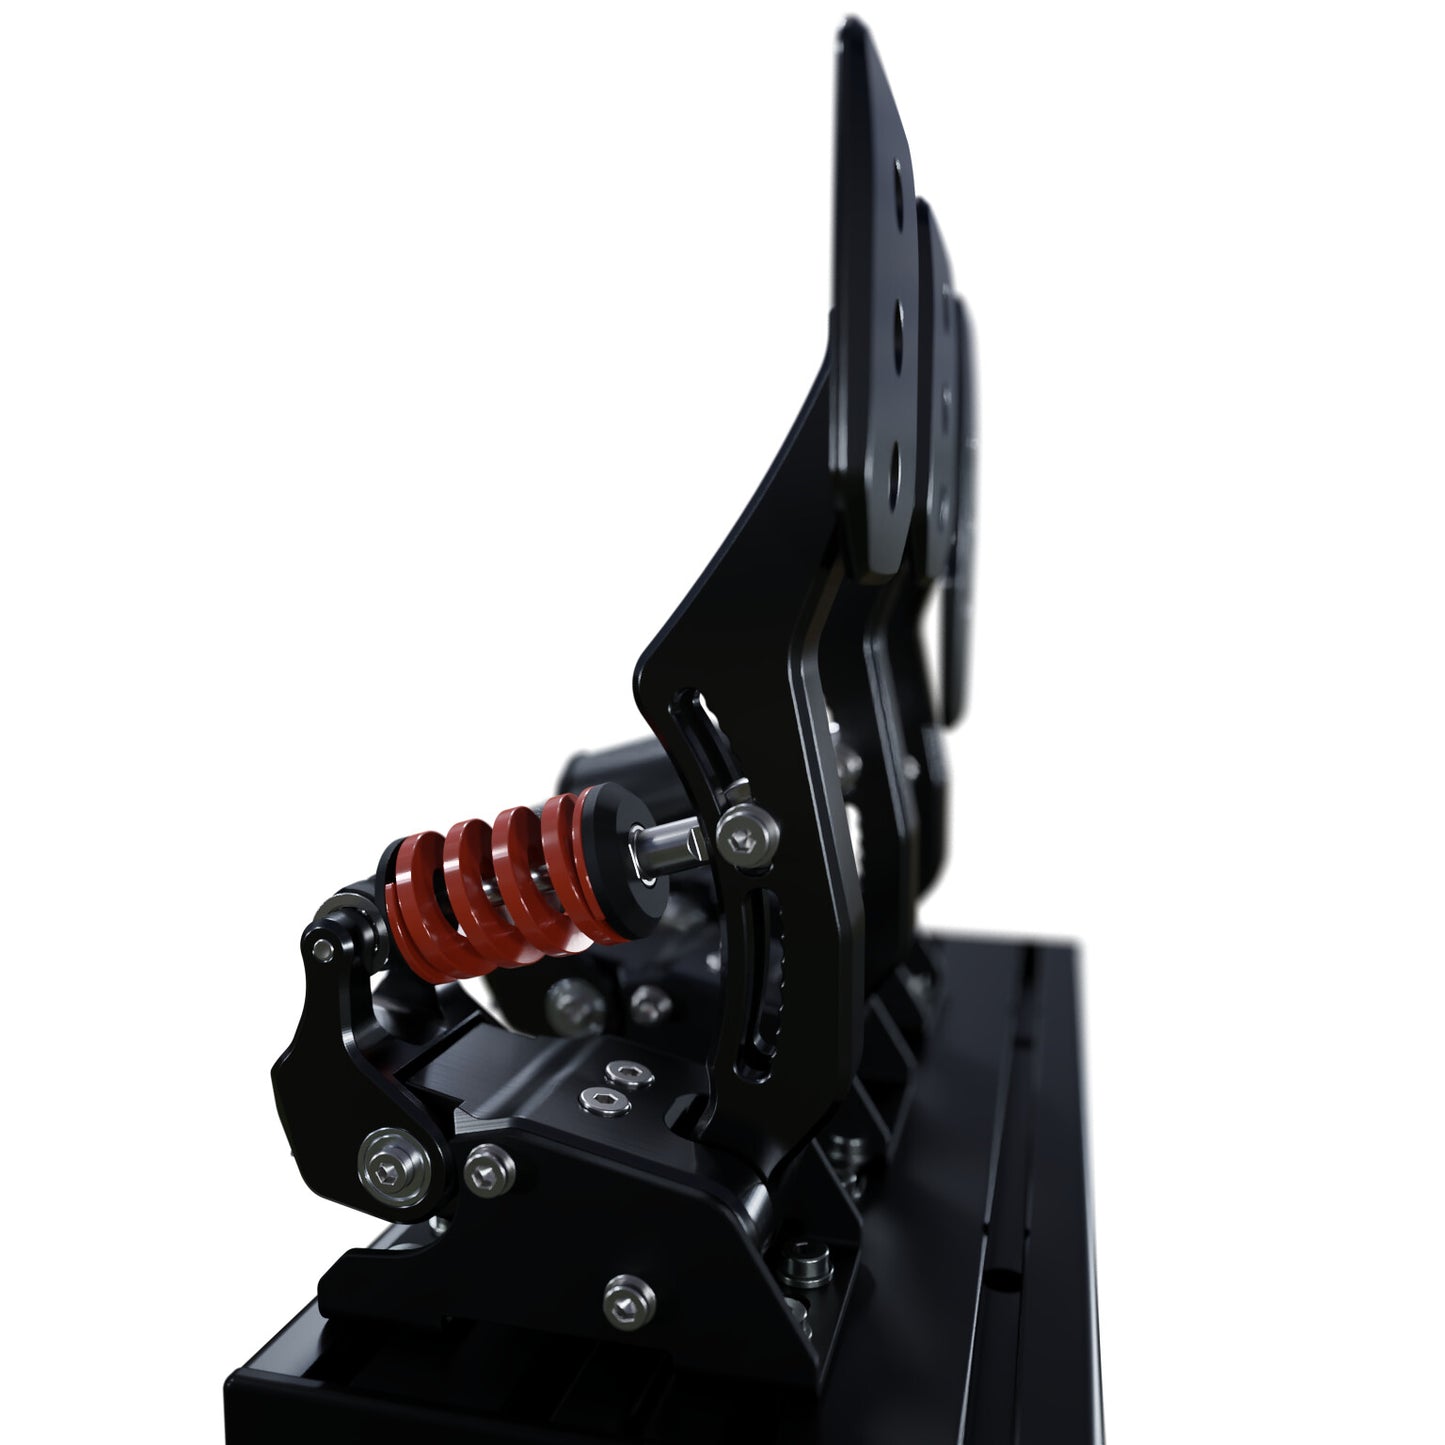 SIMGRADE Thera 3-pedal Throttle, Brake, Clutch (TBC) set